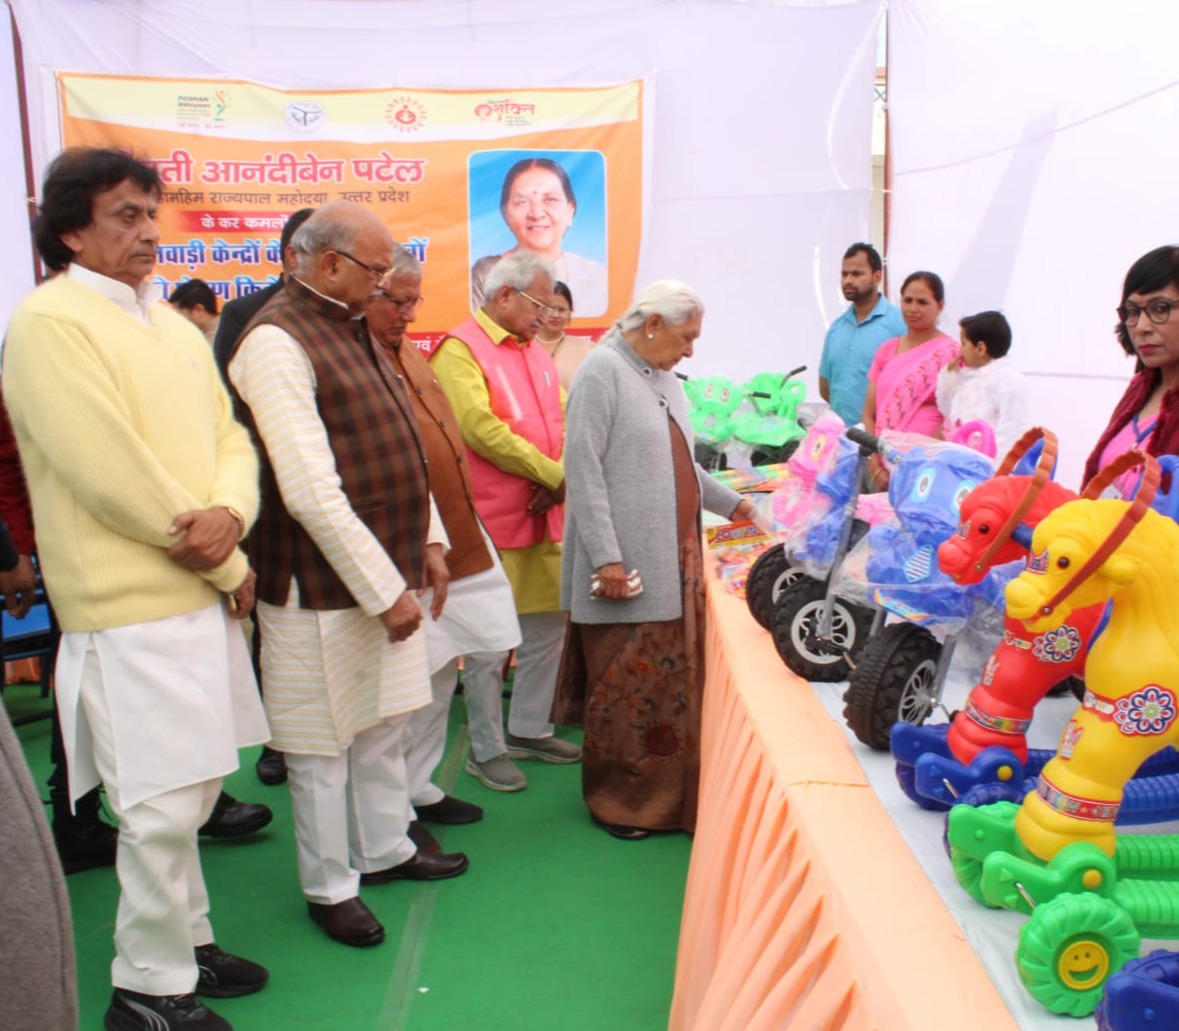 The Governor distributed 300 Anganwadi kits in Meerut